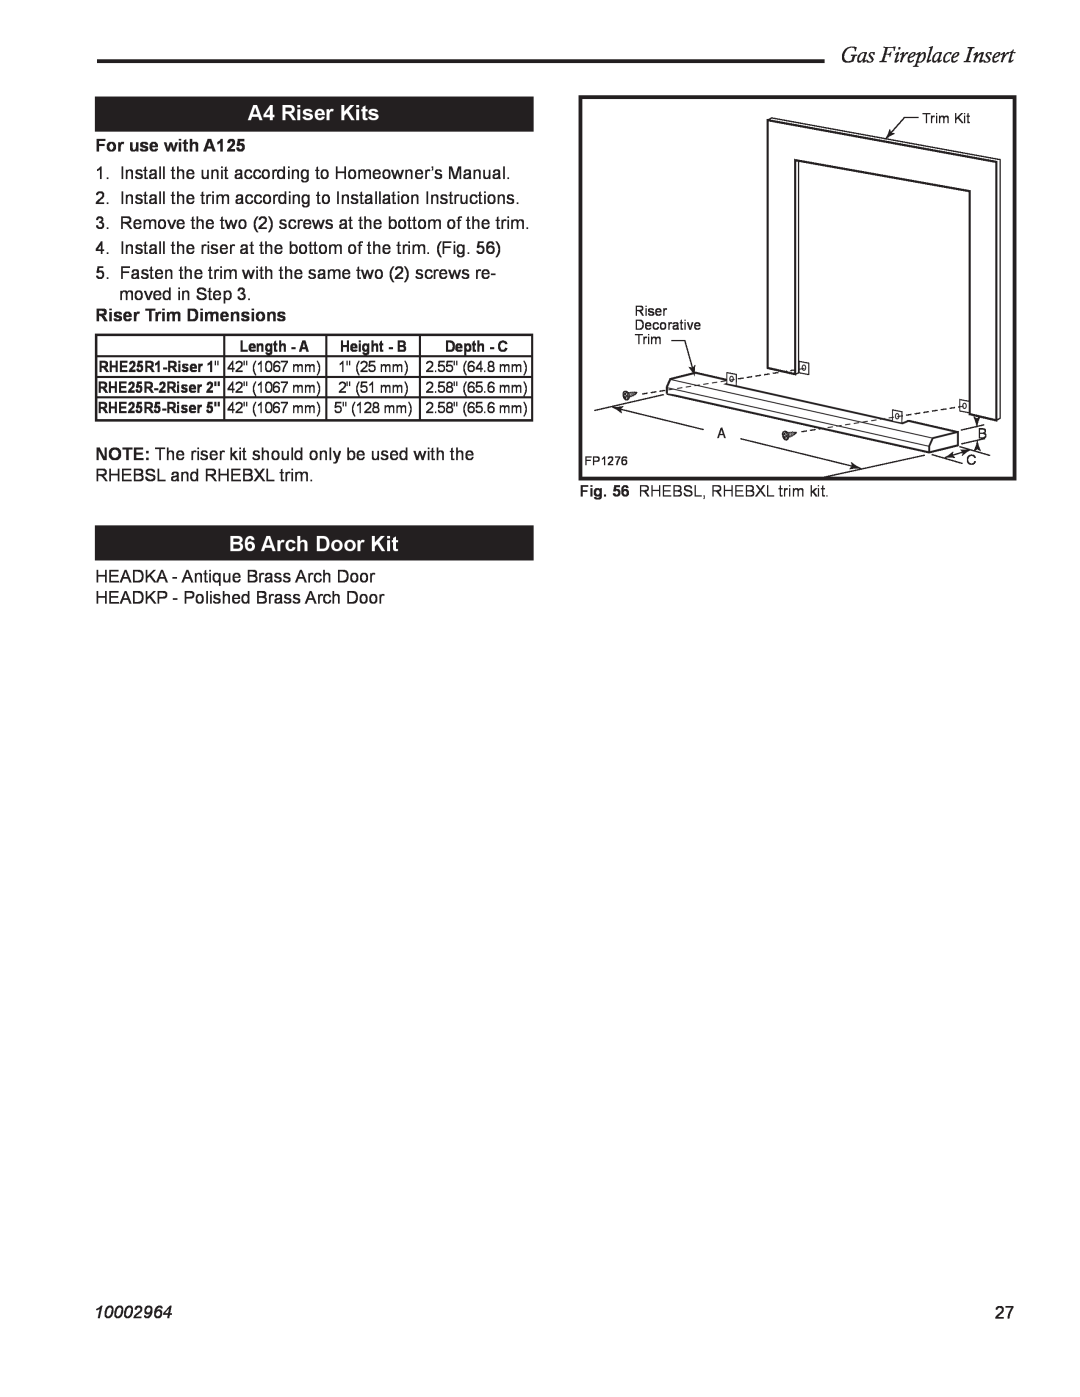 CFM Corporation A132, A125 manual B6 Arch Door Kit, Gas Fireplace Insert, A4 Riser Kits, 10002964 